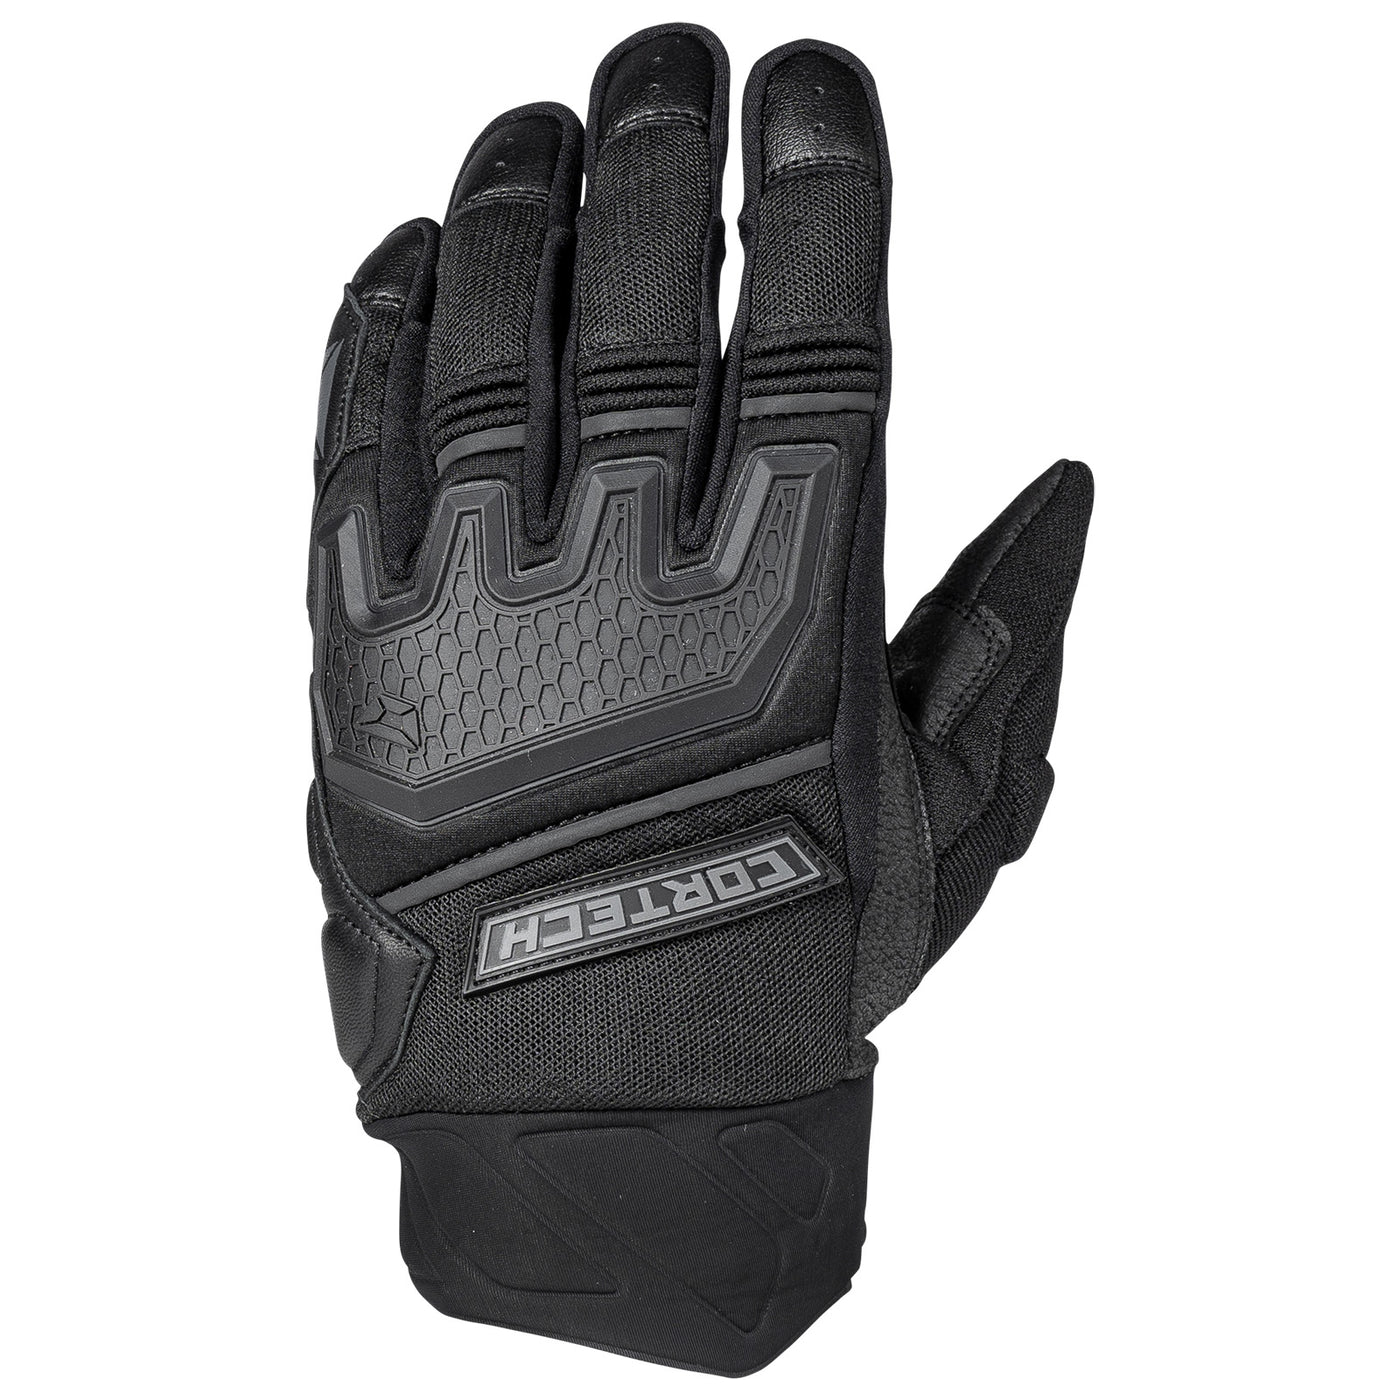 Cortech Women's Aero-Flo 2.0 Glove